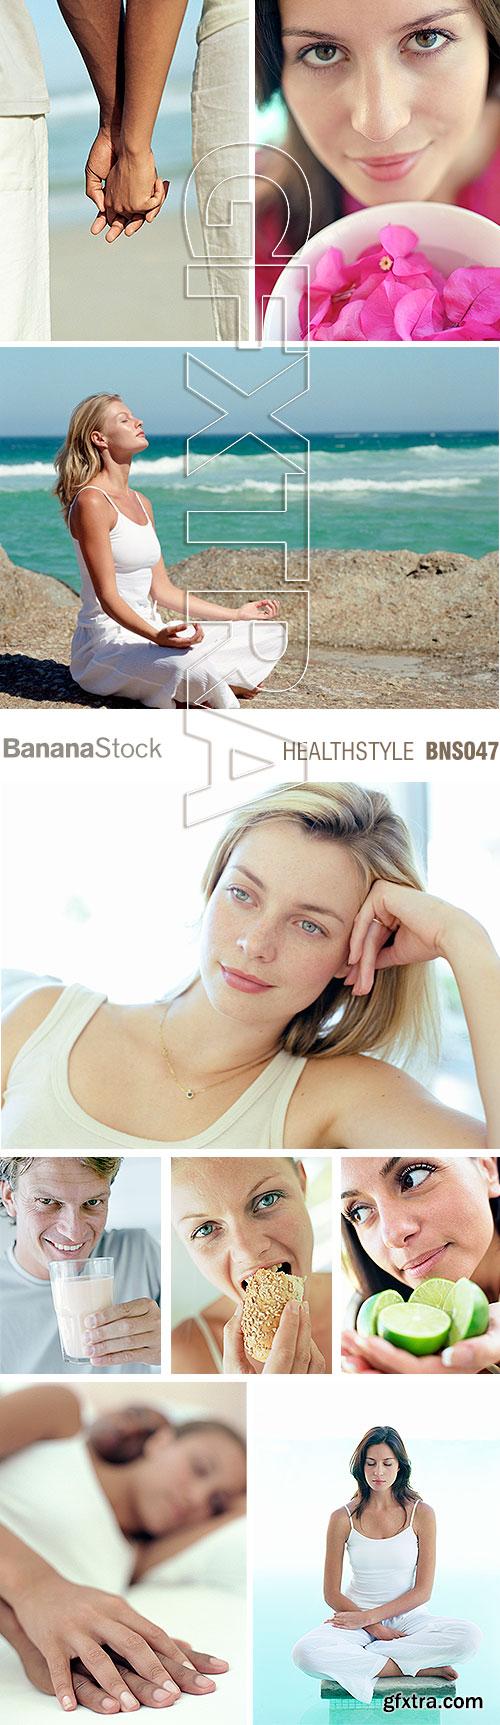 BananaStock BNS047 Healthstyle